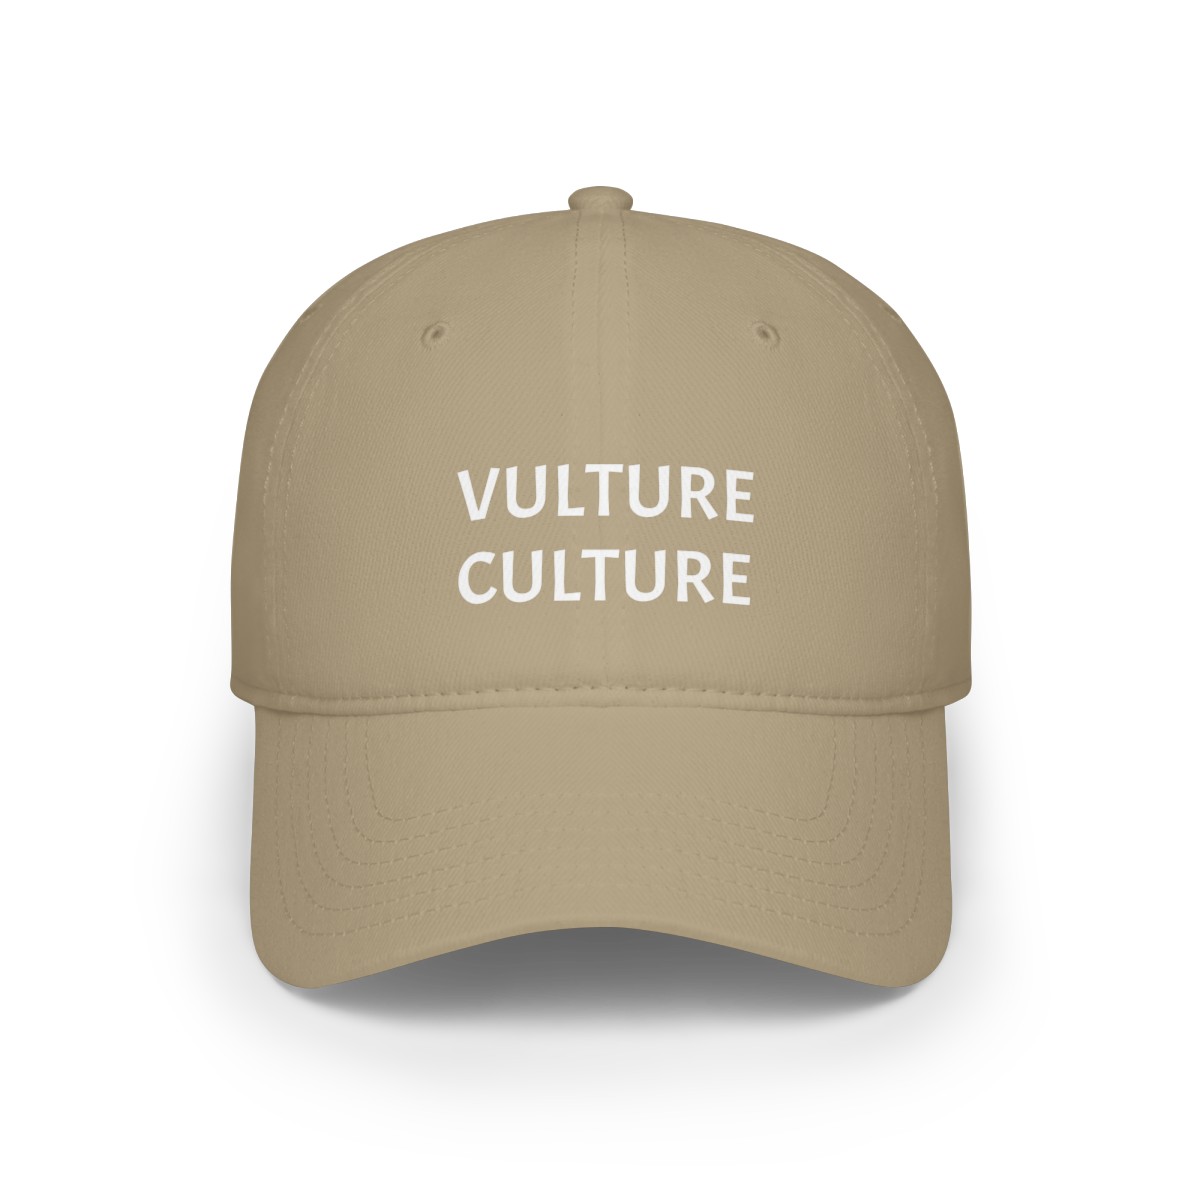 Vulture Culture Low Profile Dad Hat product thumbnail image